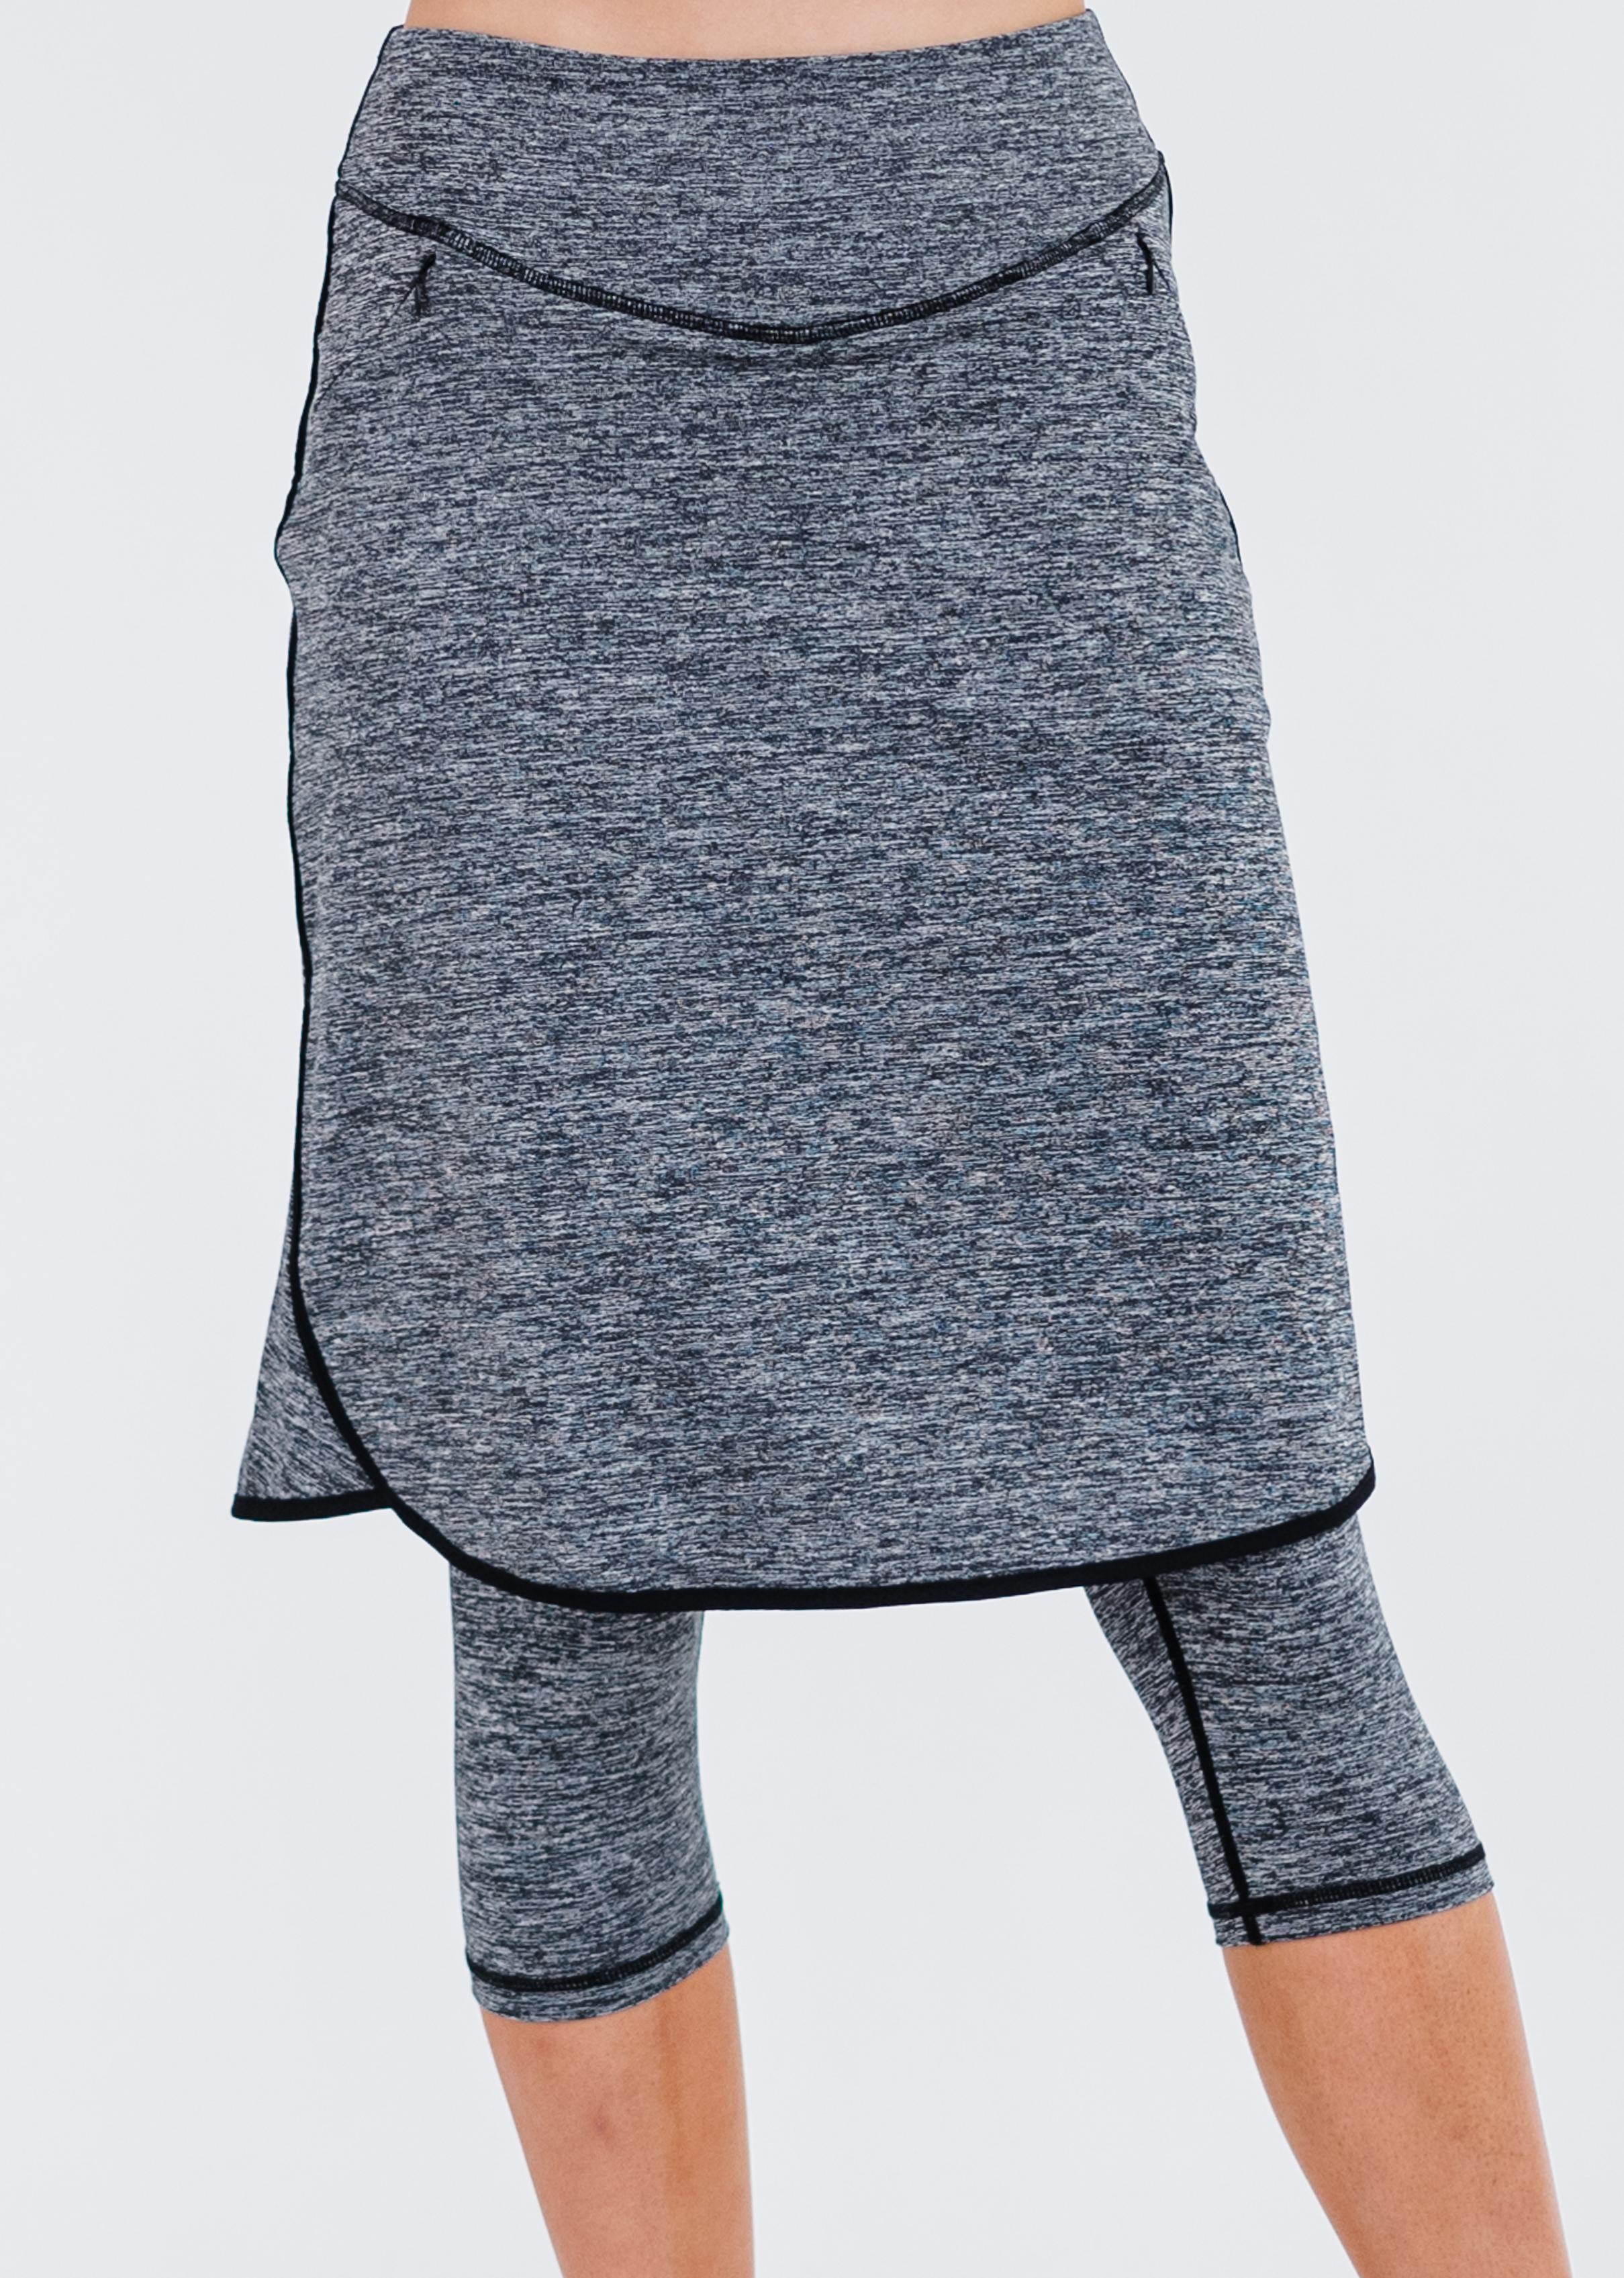 MYEBP Yoga Pants Sports With Skirt Hem Anti Cellulite Compression